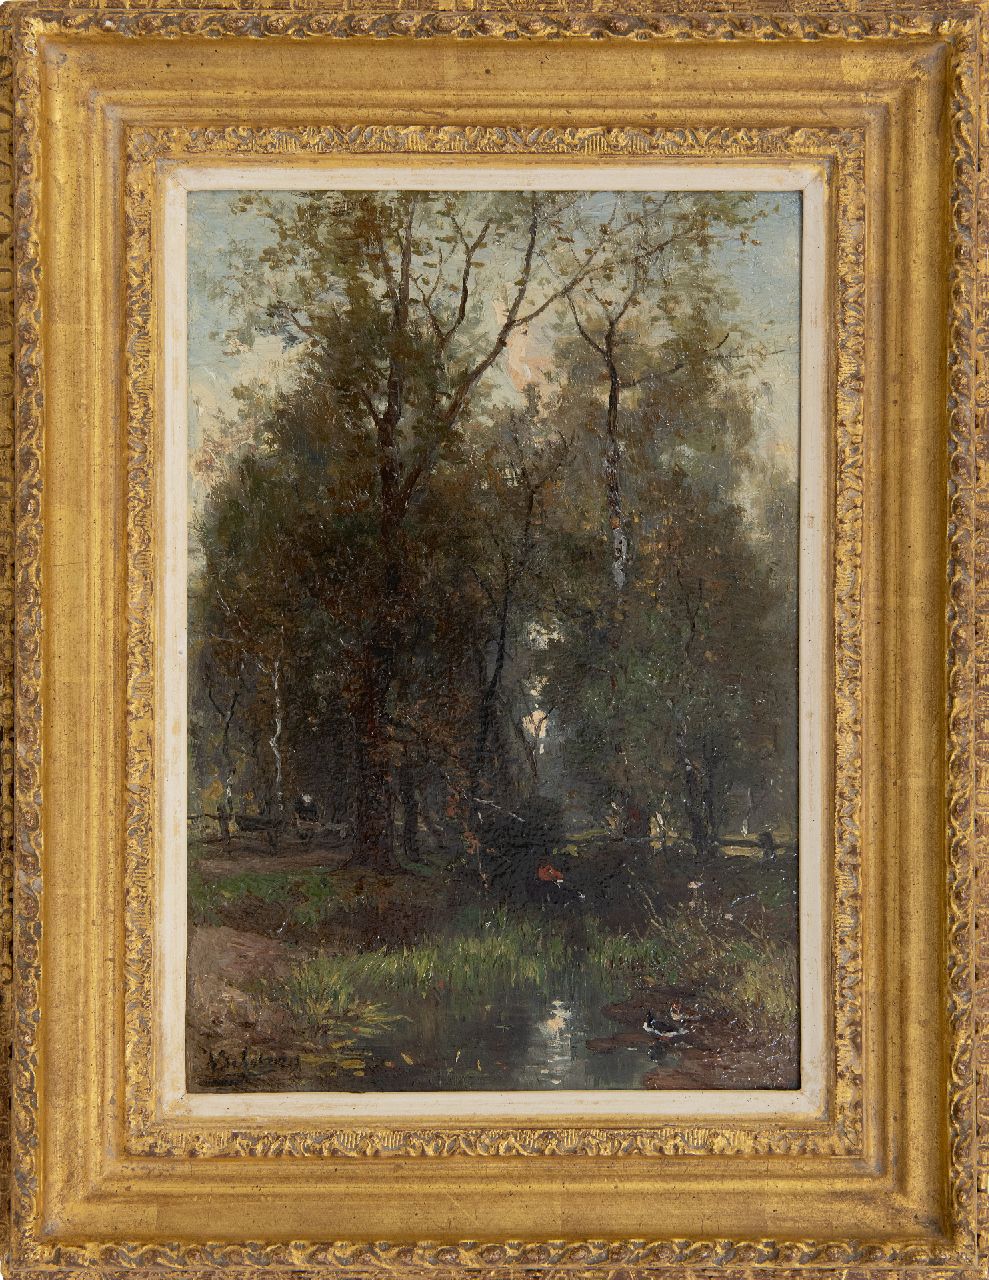 Bilders J.W.  | Johannes Warnardus Bilders | Paintings offered for sale | A forest pond, oil on panel 33.7 x 23.0 cm, signed l.l.